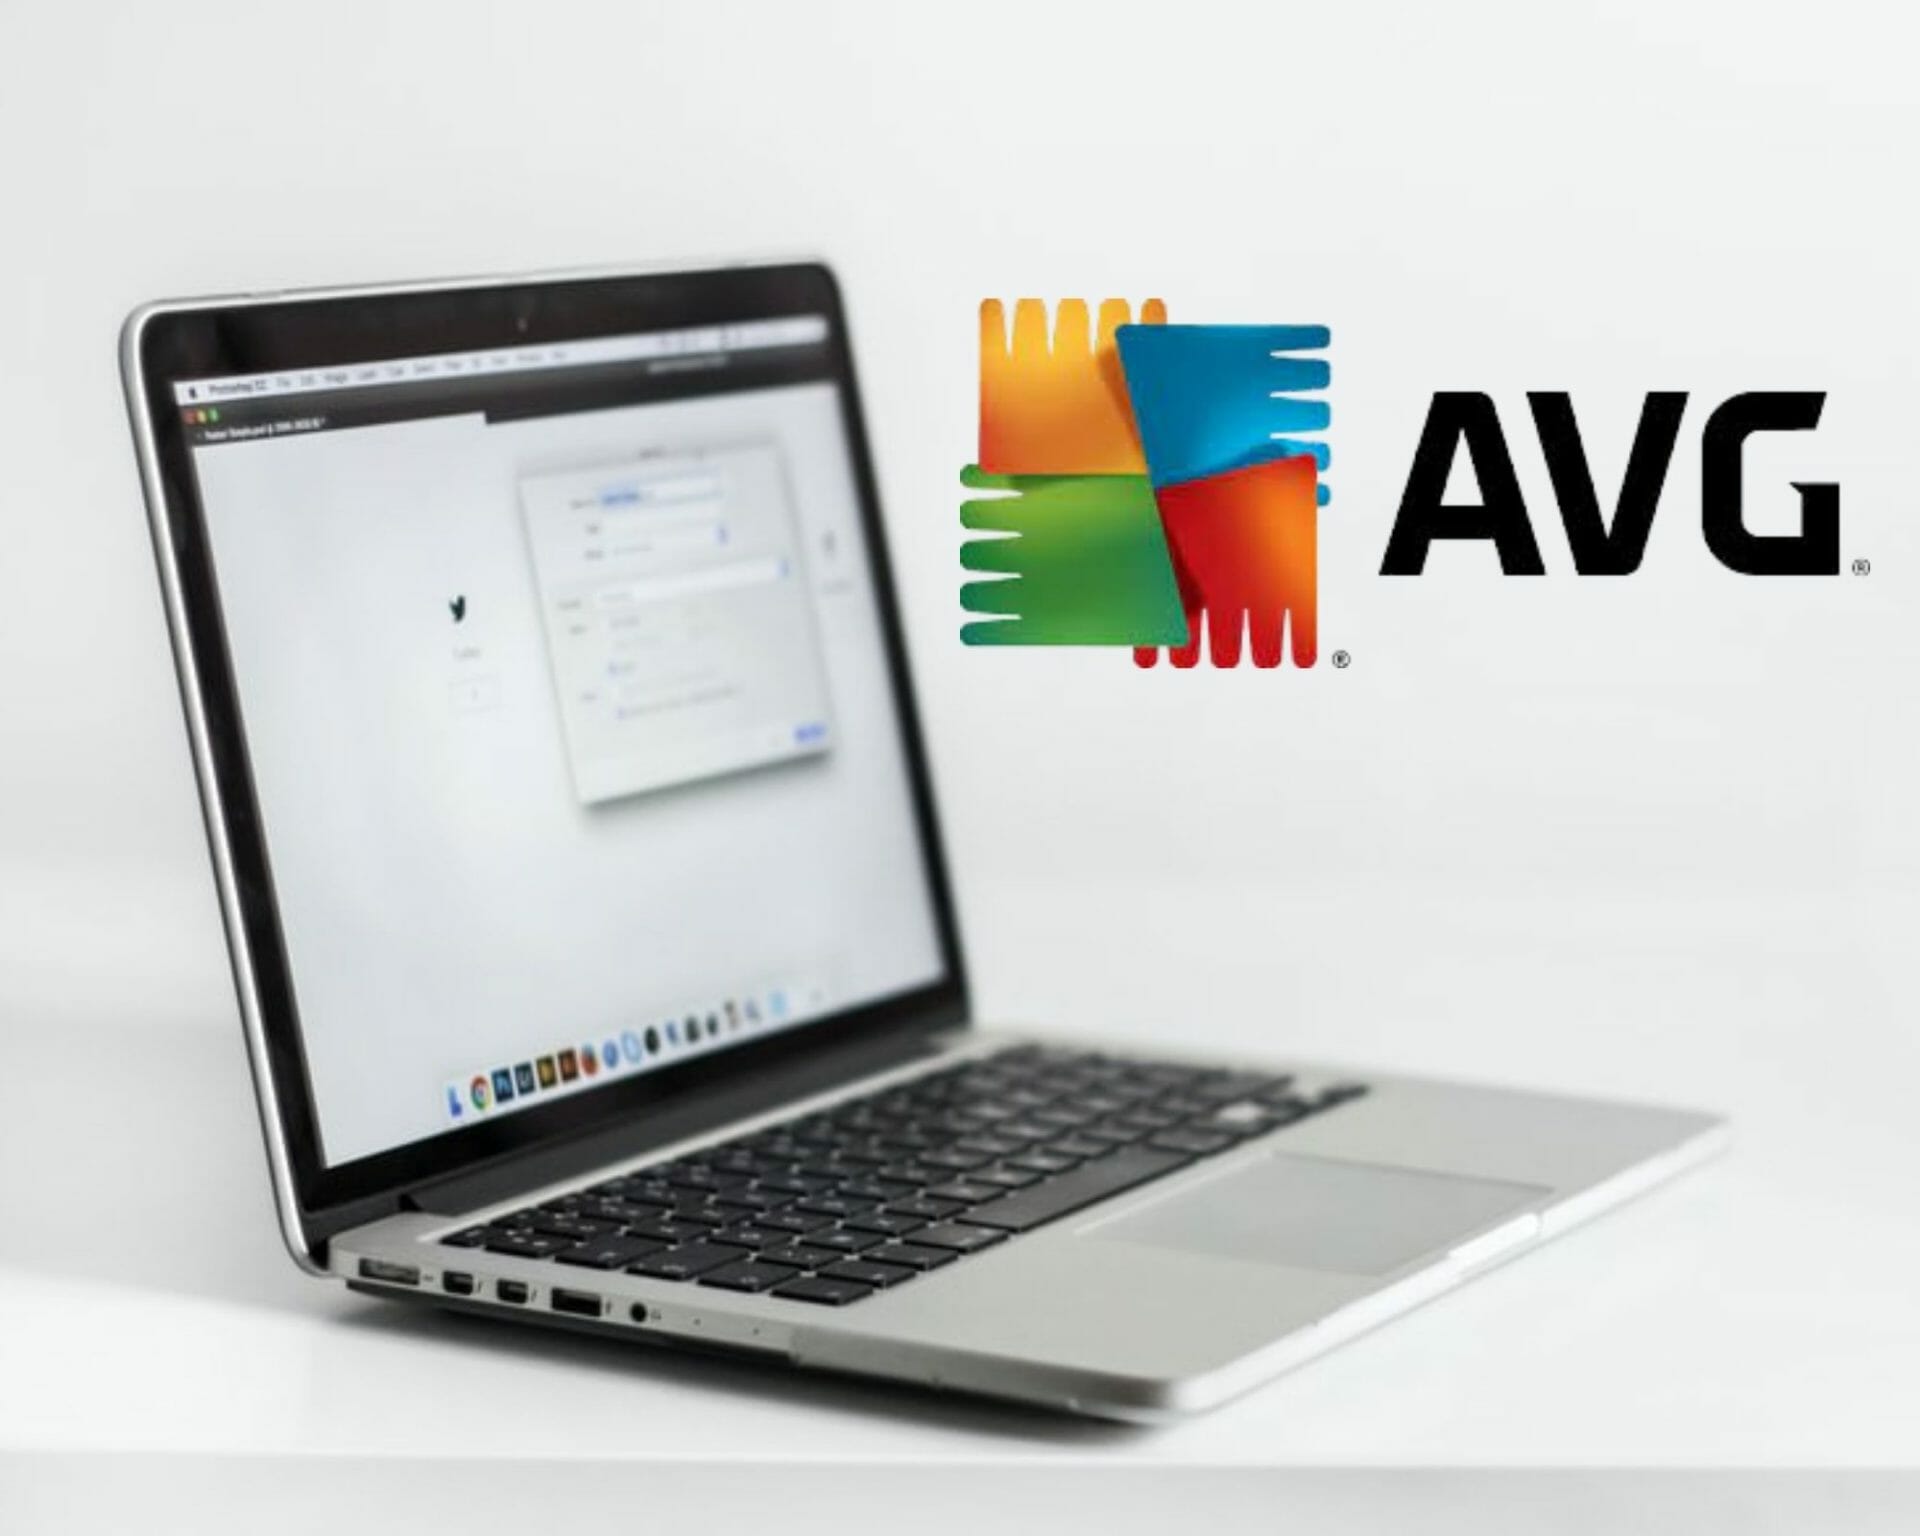 AVG logo next to the opened laptop